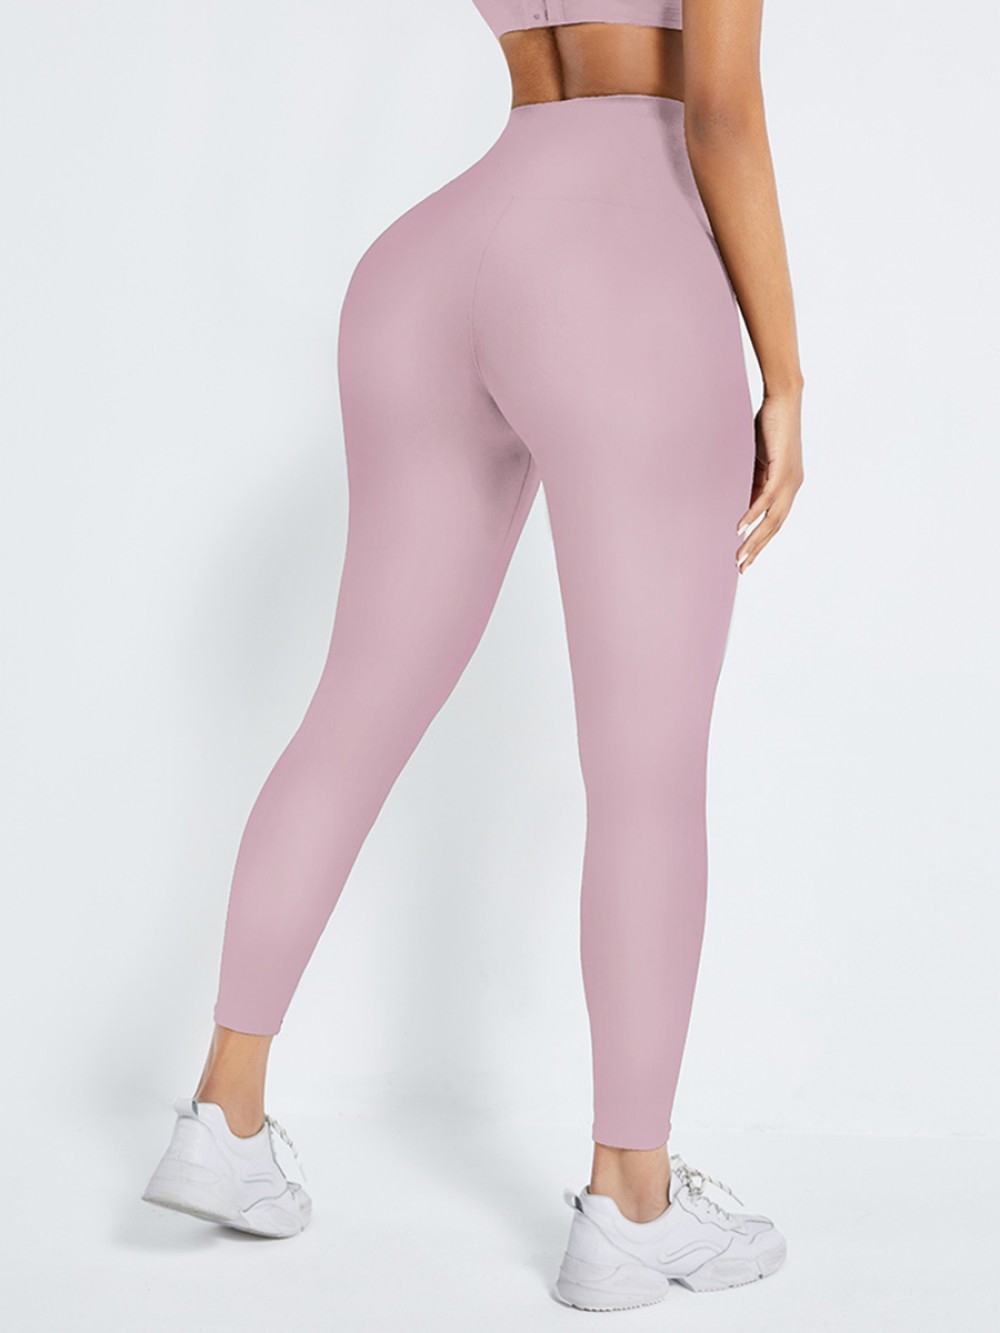 Light Pink 2-In-1 Shapewear Leggings High Waist Curve Creator